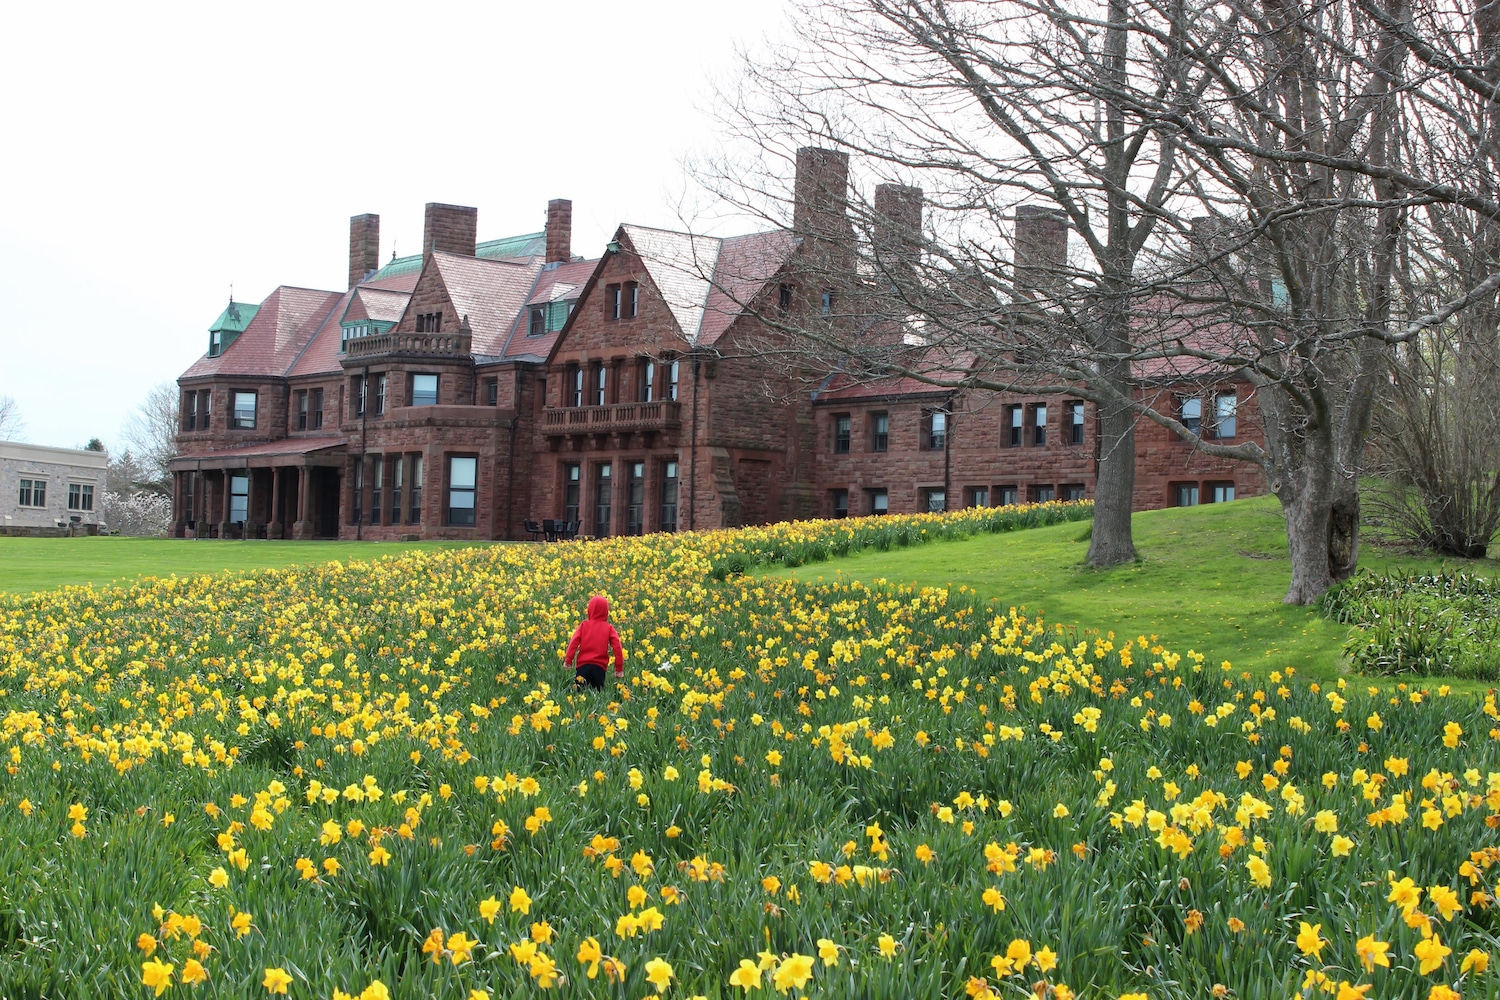 Daffodils in Newport, Rhode Island.